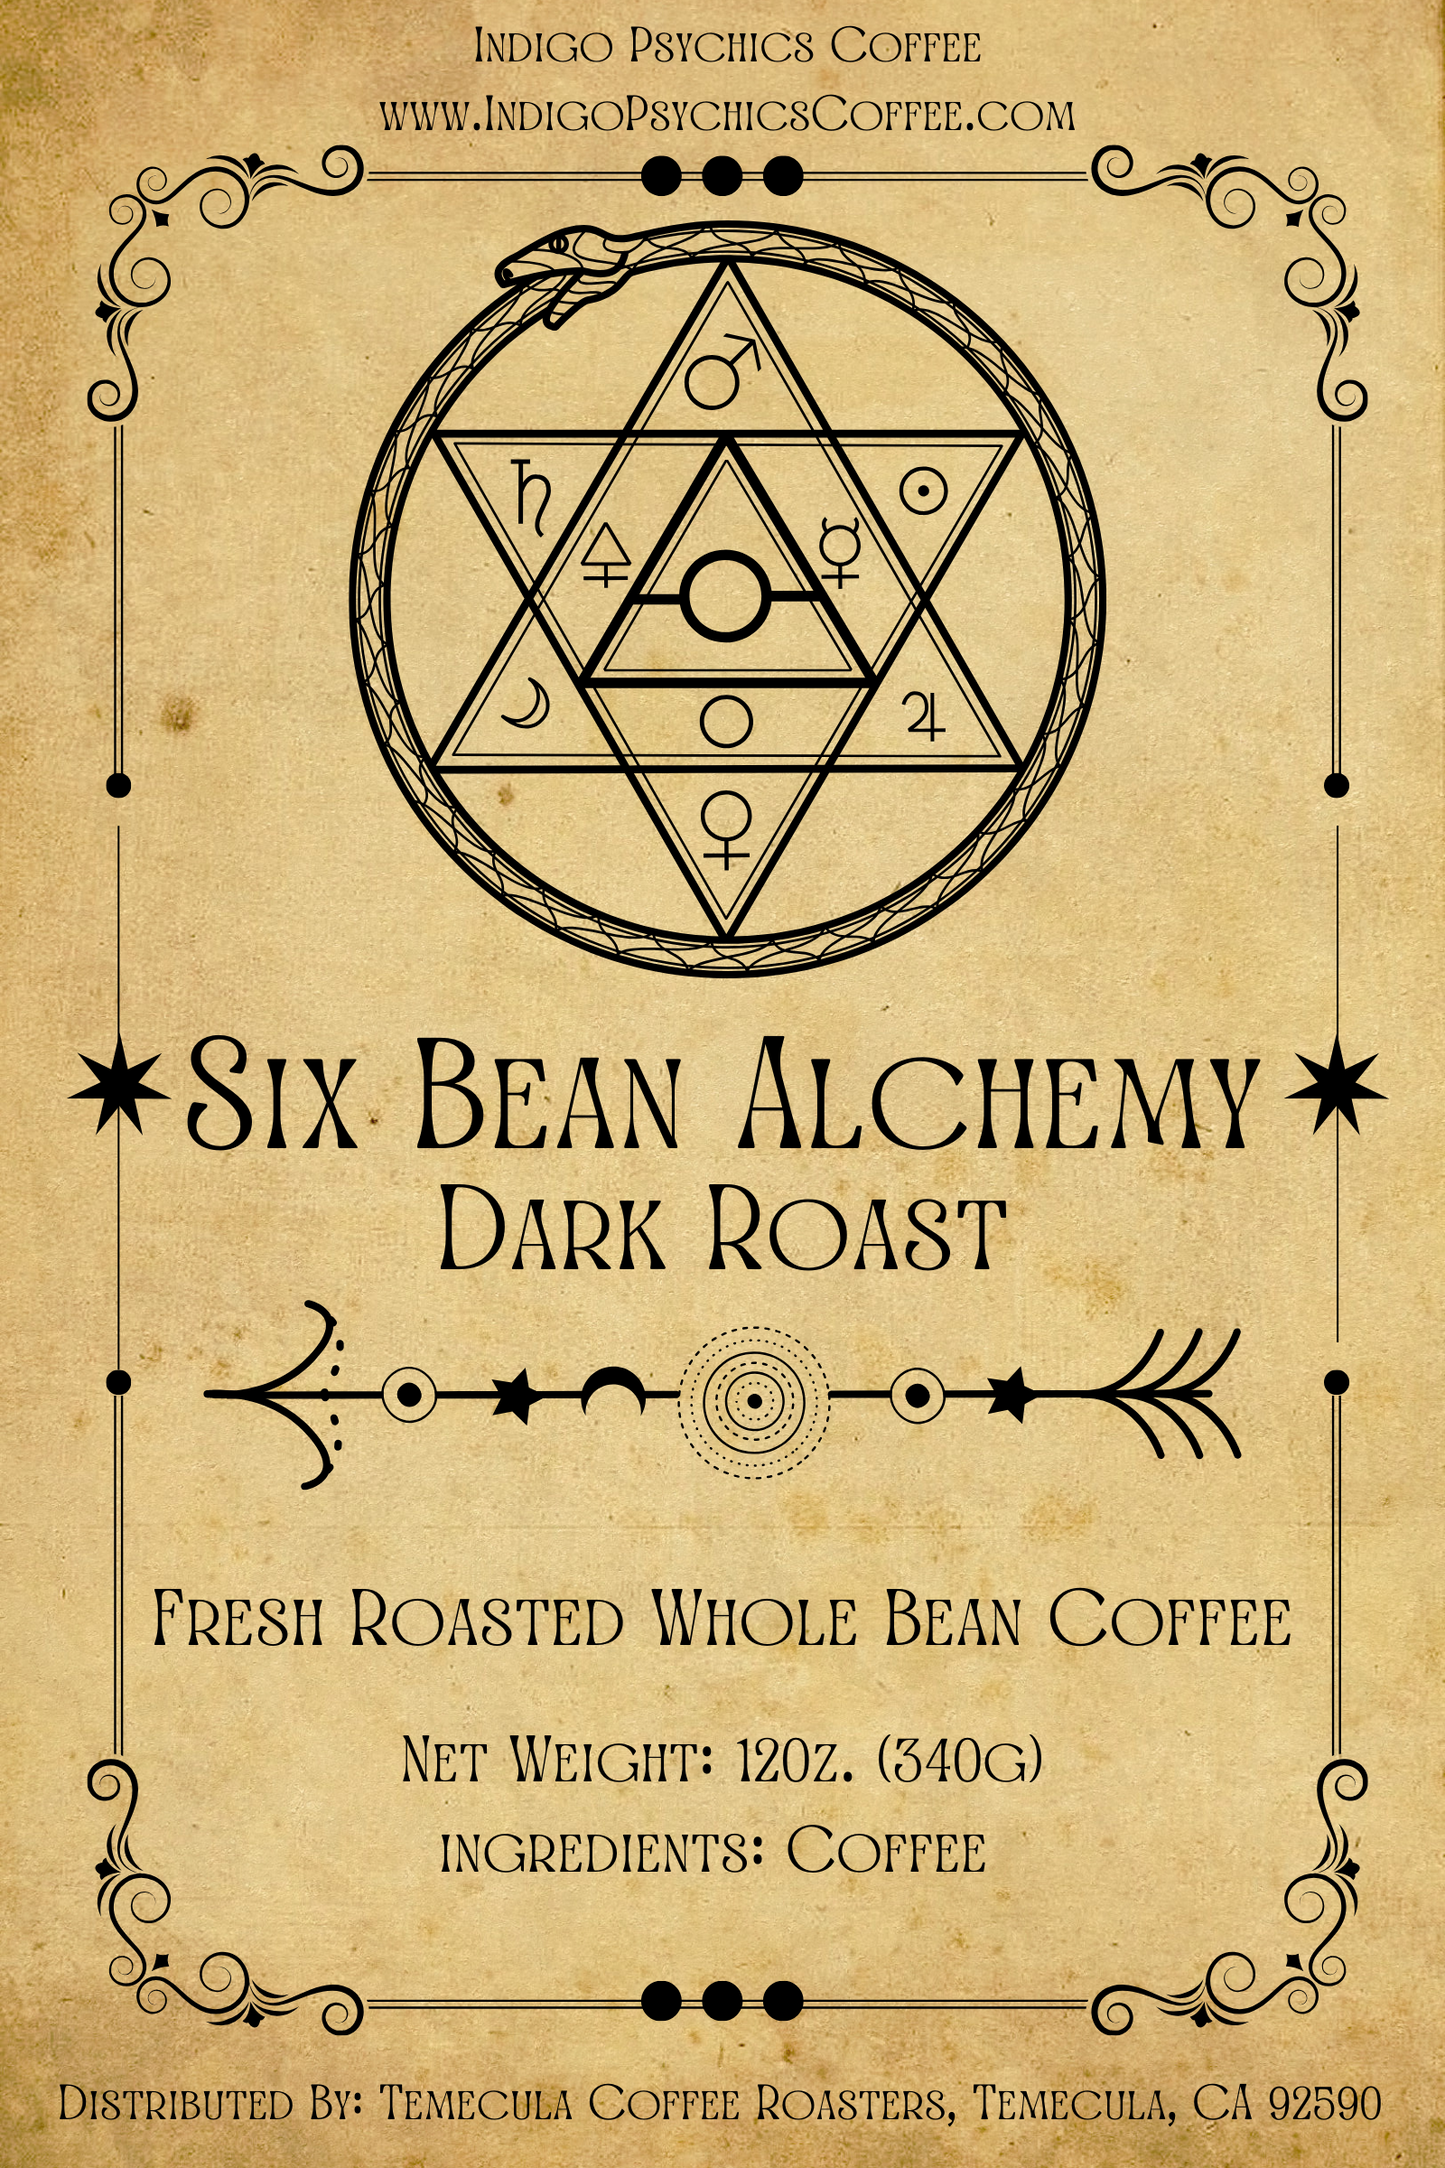 Six Bean Alchemy Dark Roast